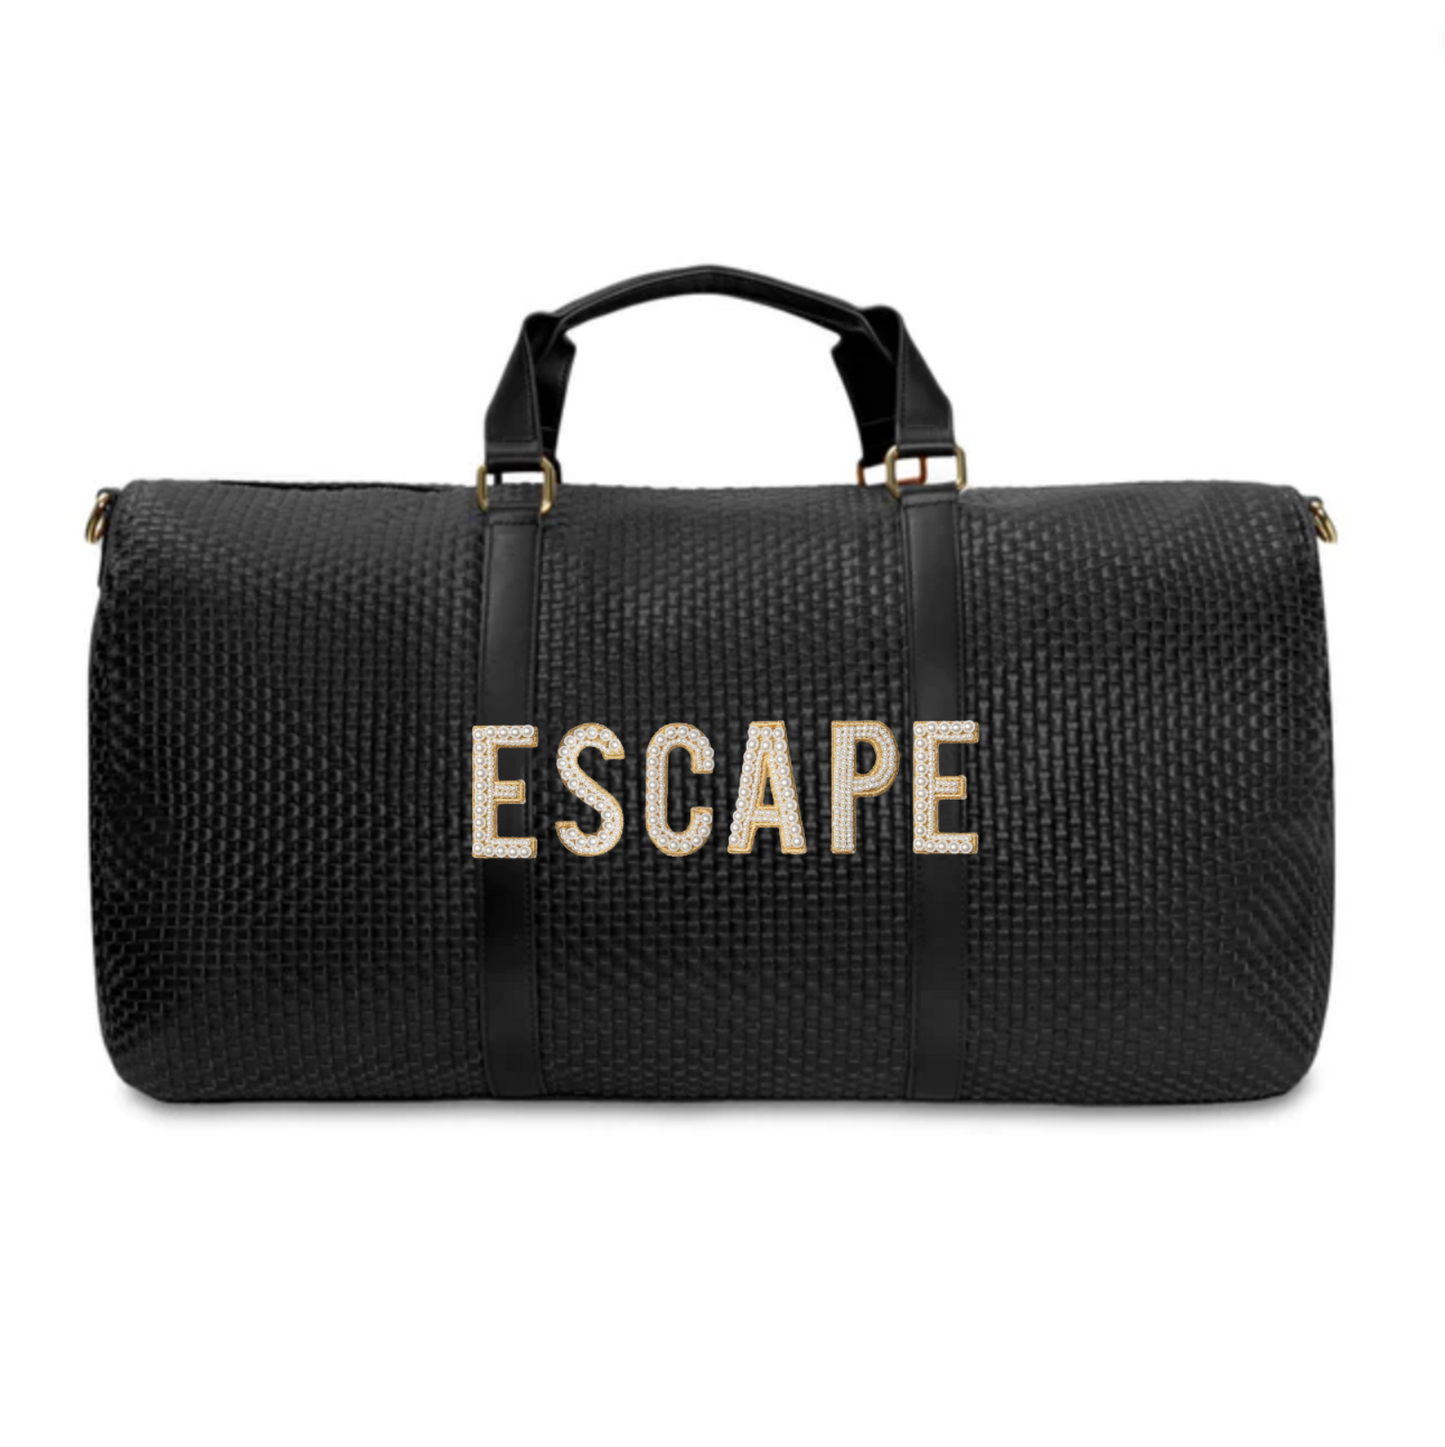 Escape Duffle Bag | Travel